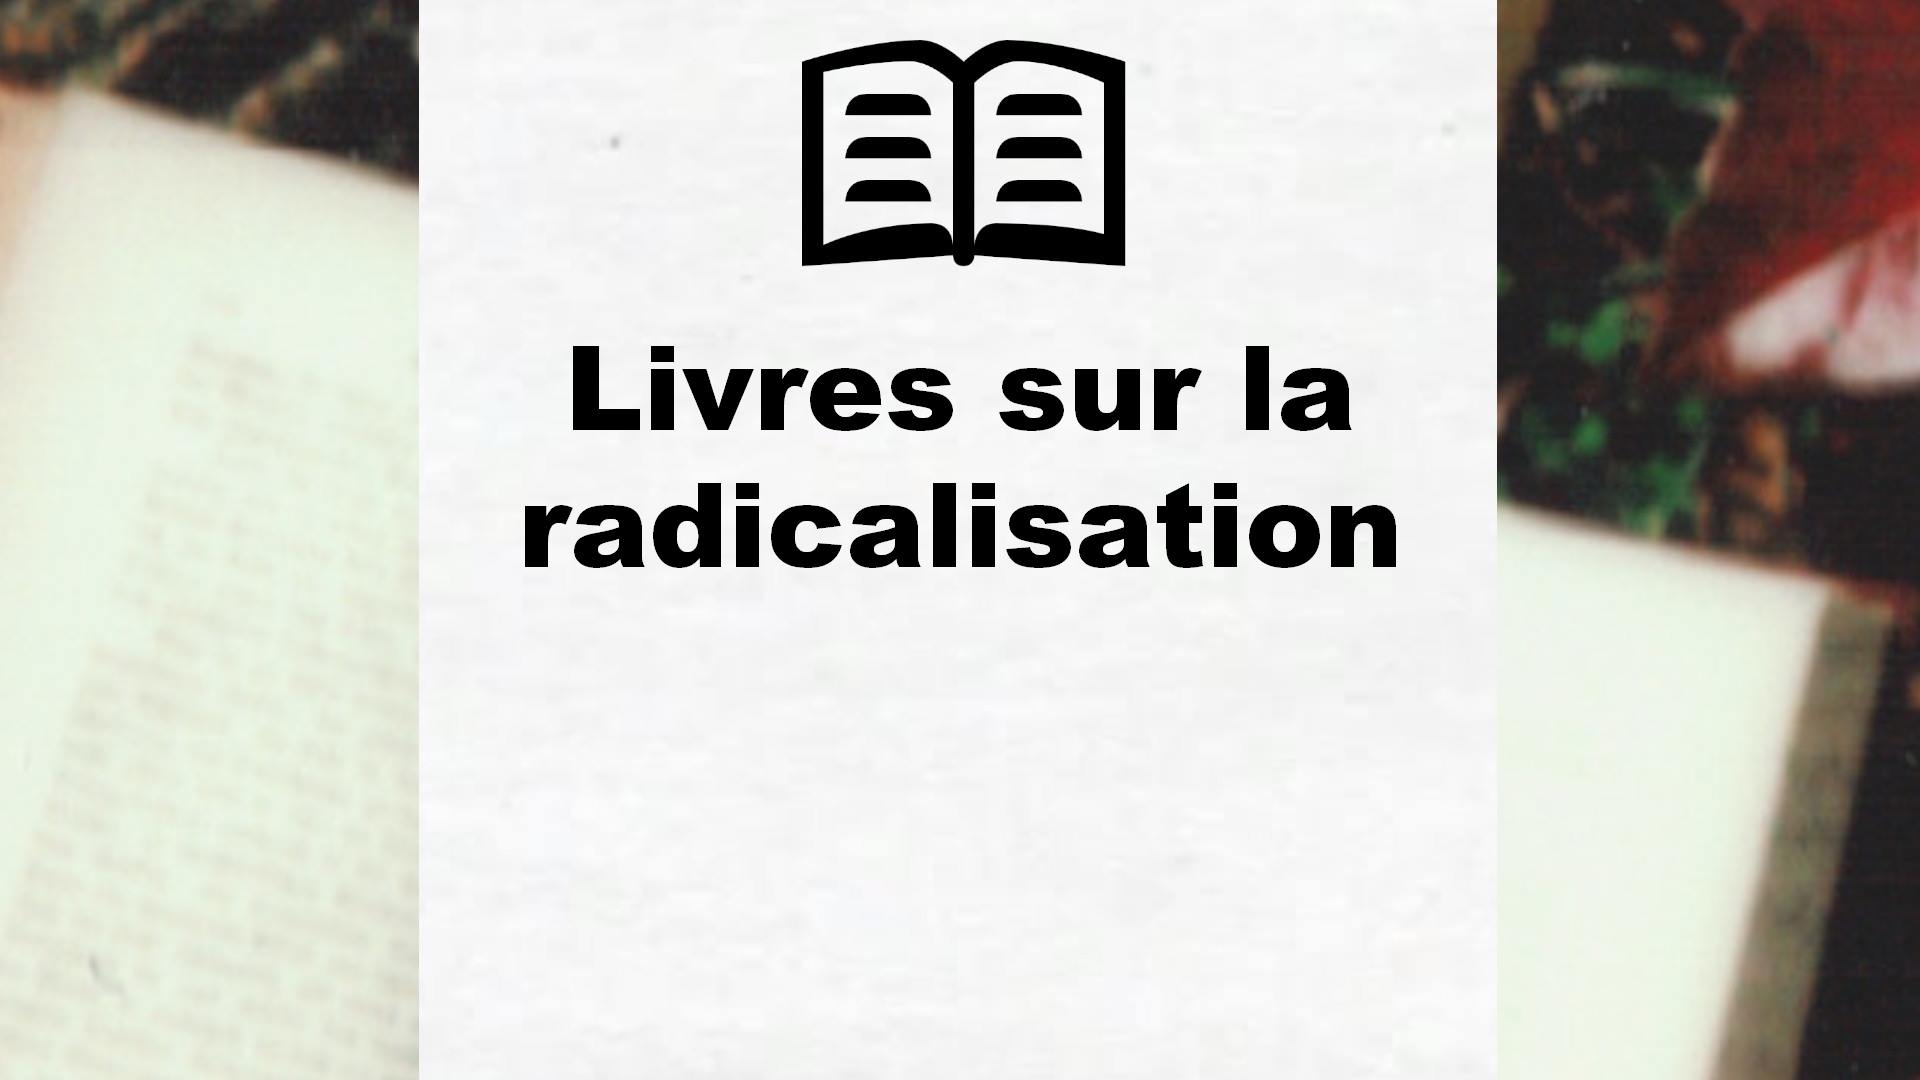 Livres sur la radicalisation